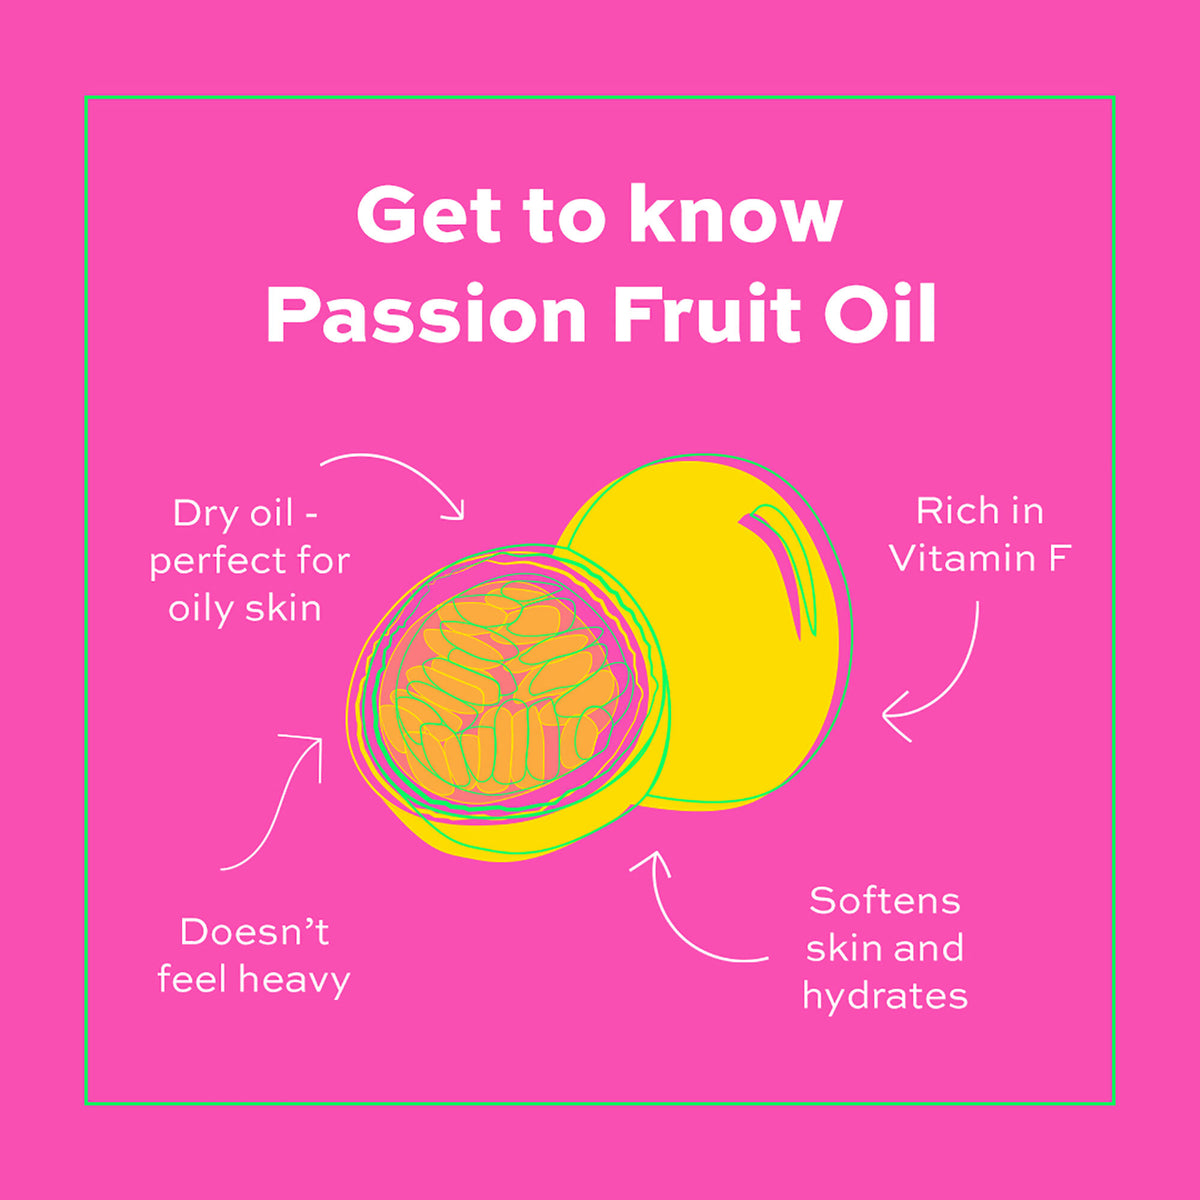 Revolution Skincare Passion Fruit Oil 30ml